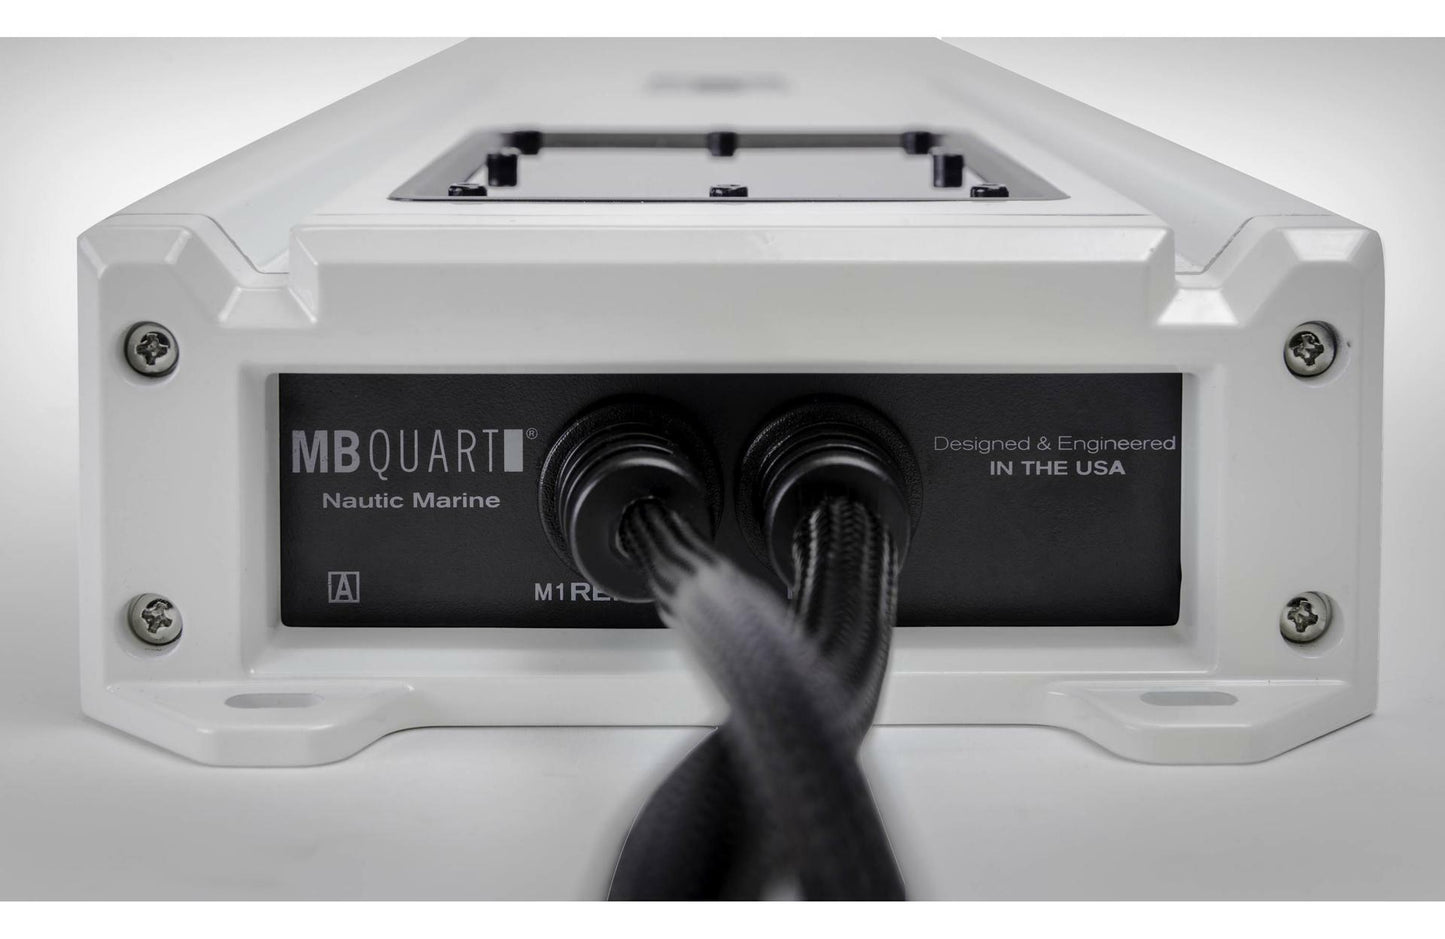 MB Quart NA3-560.4 4-channel marine amplifier 70 watts x 4 +  2 Pair Of Alpine SPS-M601W 6-1/2" 2-way marine speakers (White)